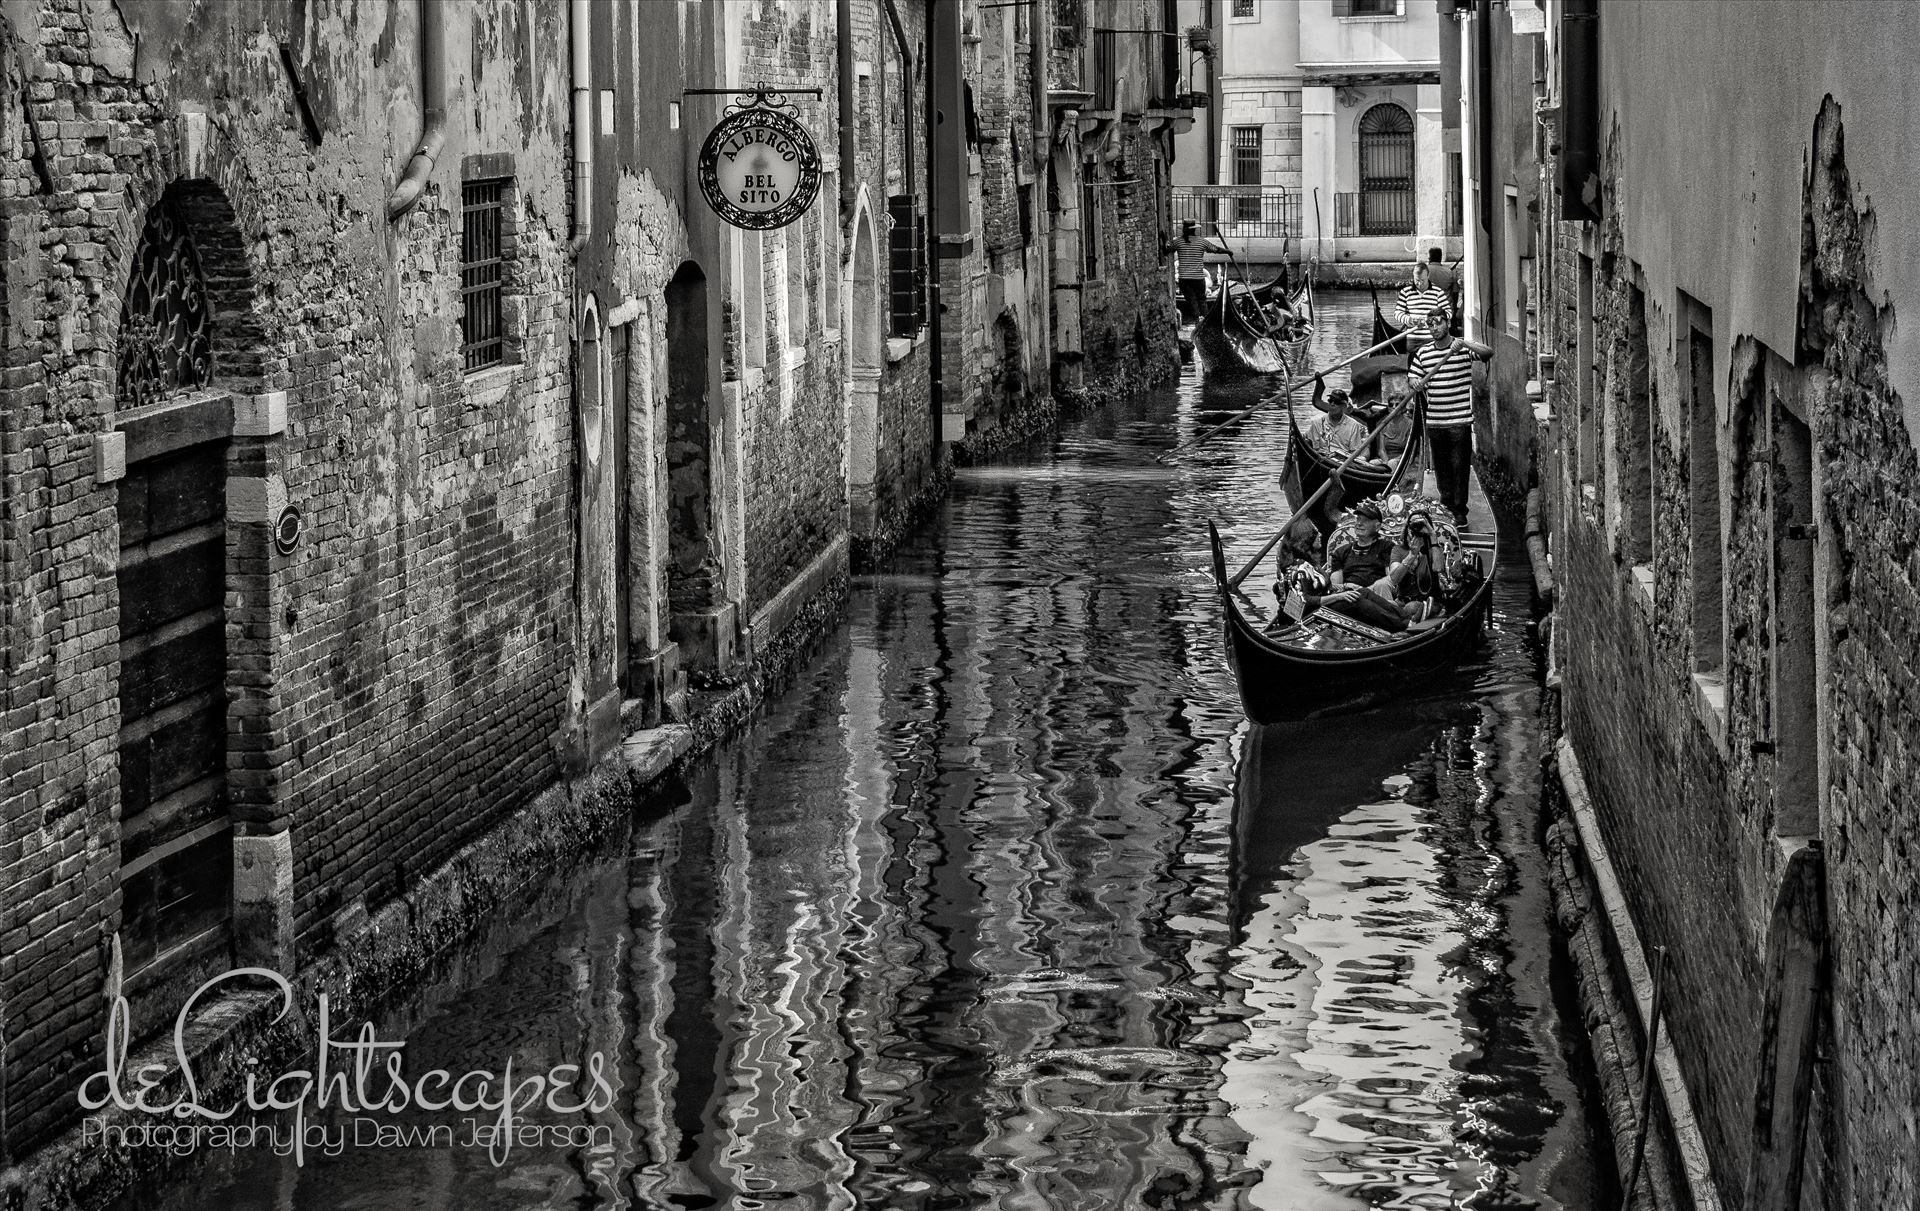 Venice -  by Dawn Jefferson